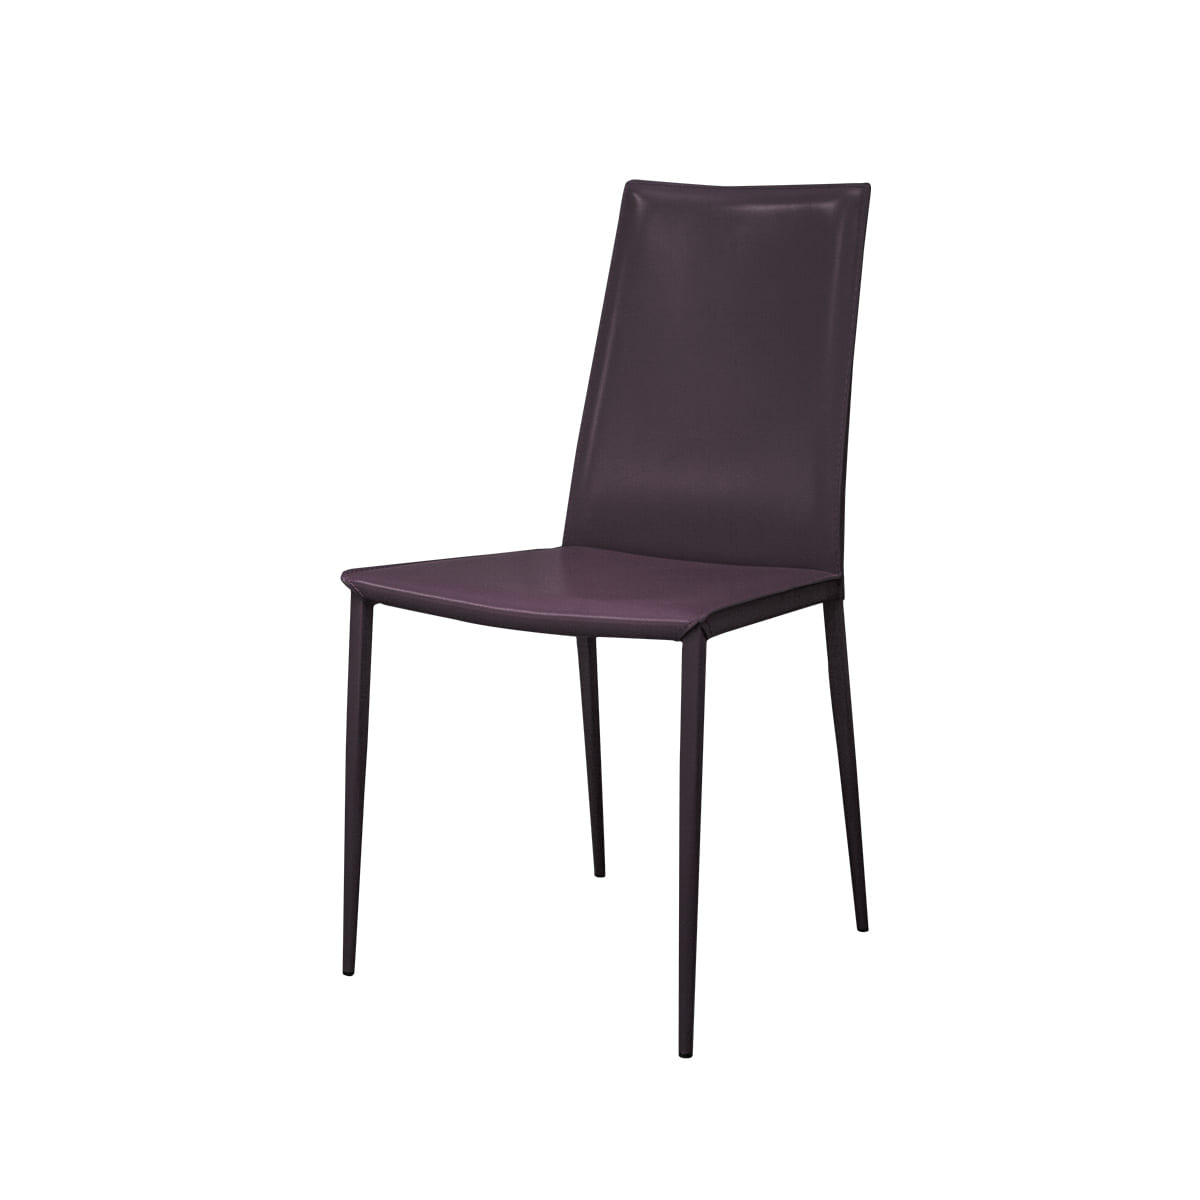 ITALSTUDIO Mina Dining Chair 미나 식탁 의자 (다크 브라운)DESIGNED BY ITALY